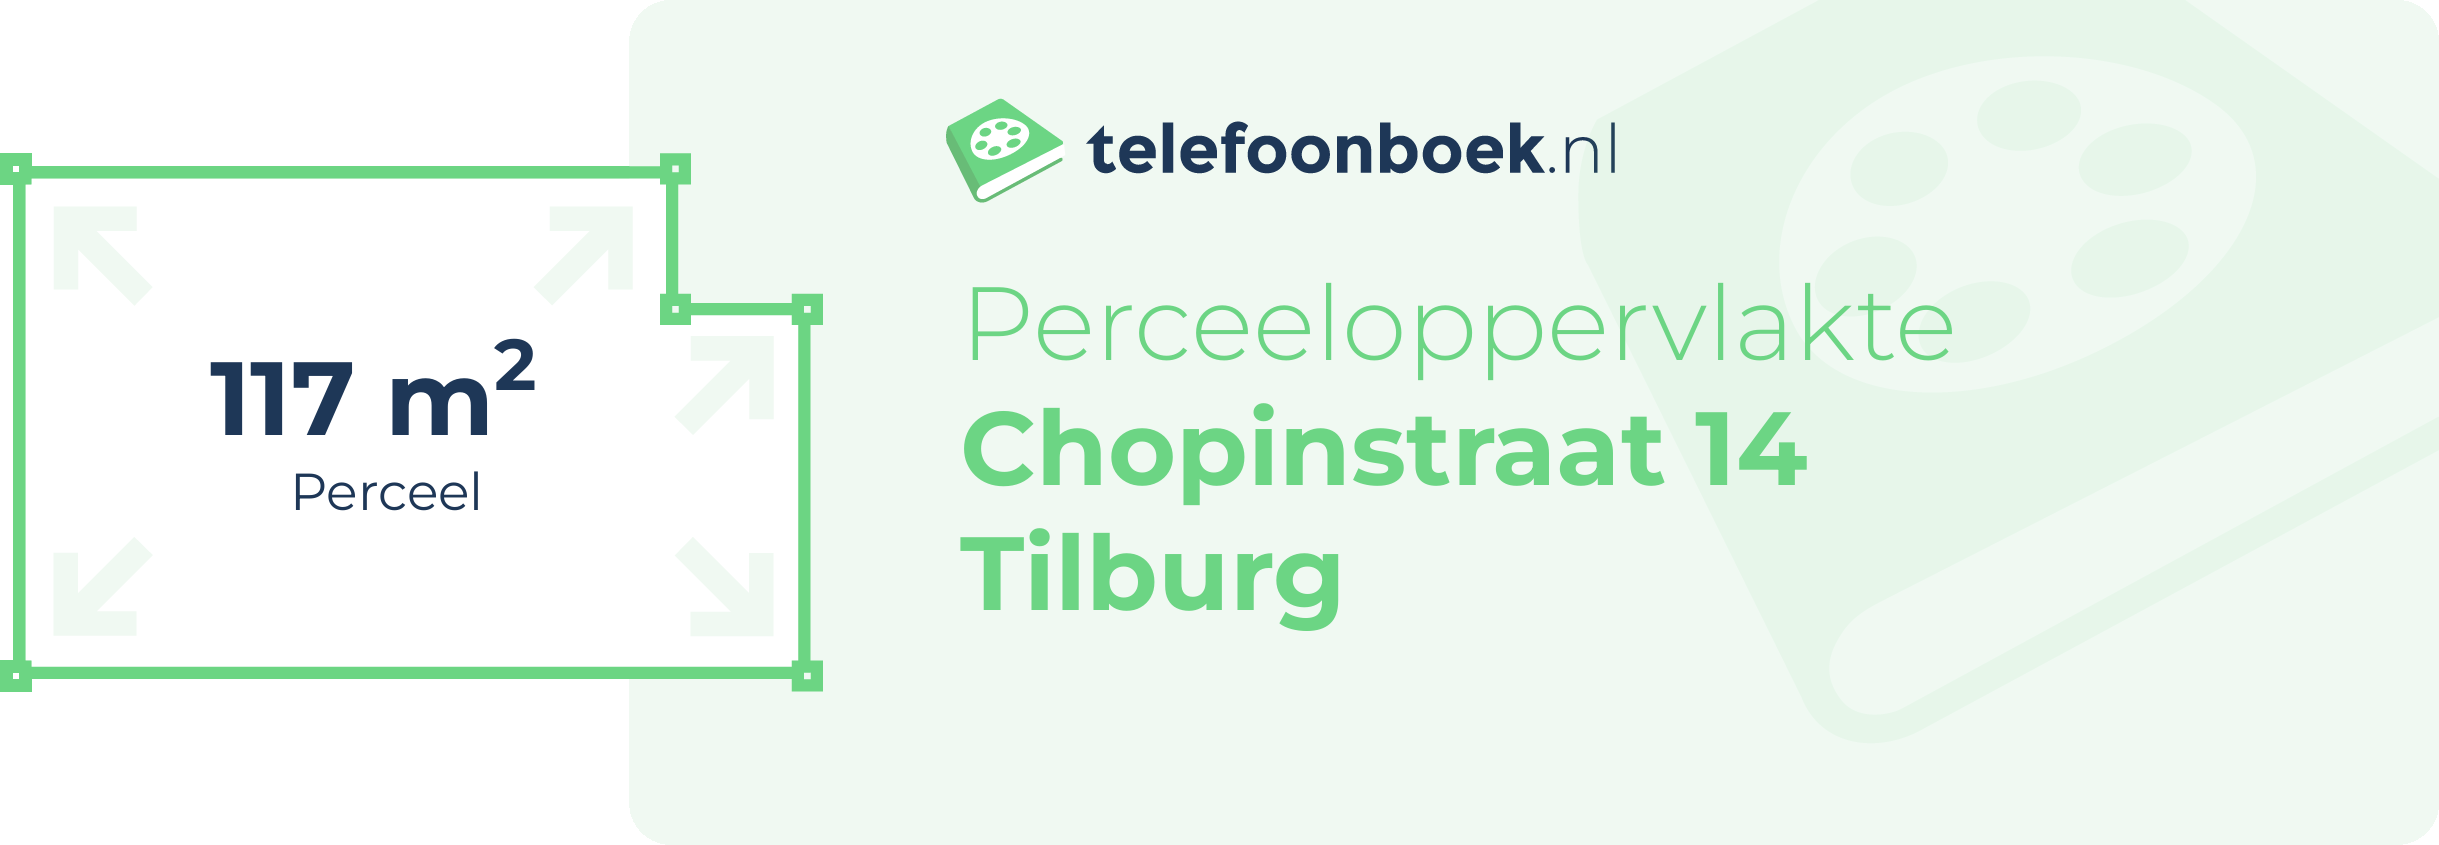 Perceeloppervlakte Chopinstraat 14 Tilburg